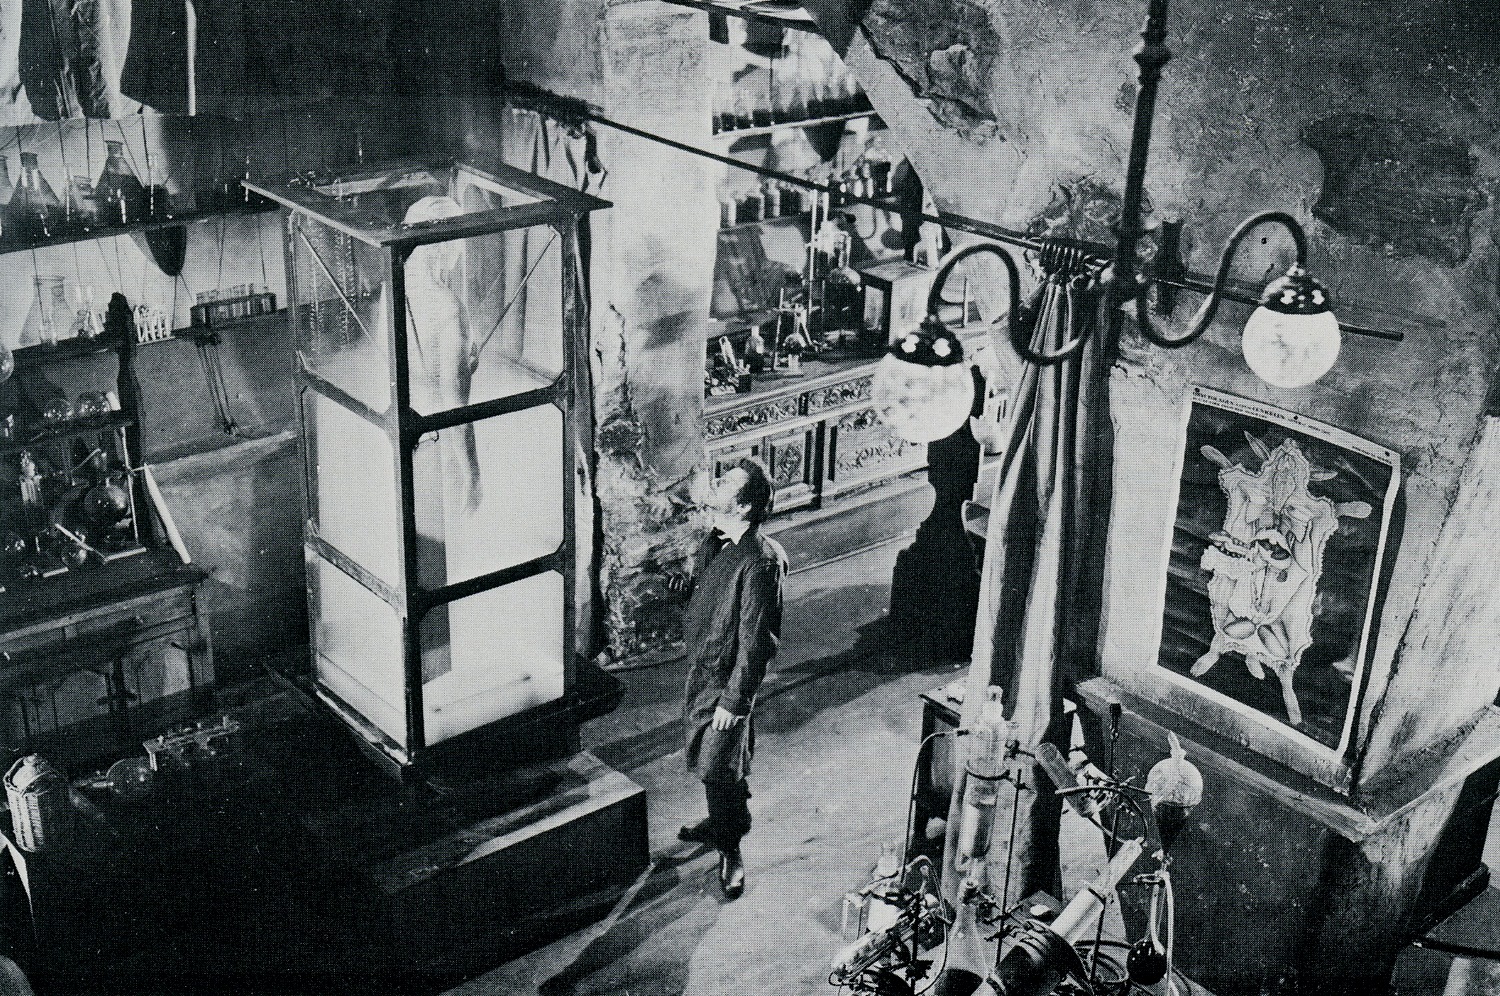 Baron Frankenstein (Peter Cushing) in his laboratory in The Revenge of Frankenstein (1958)